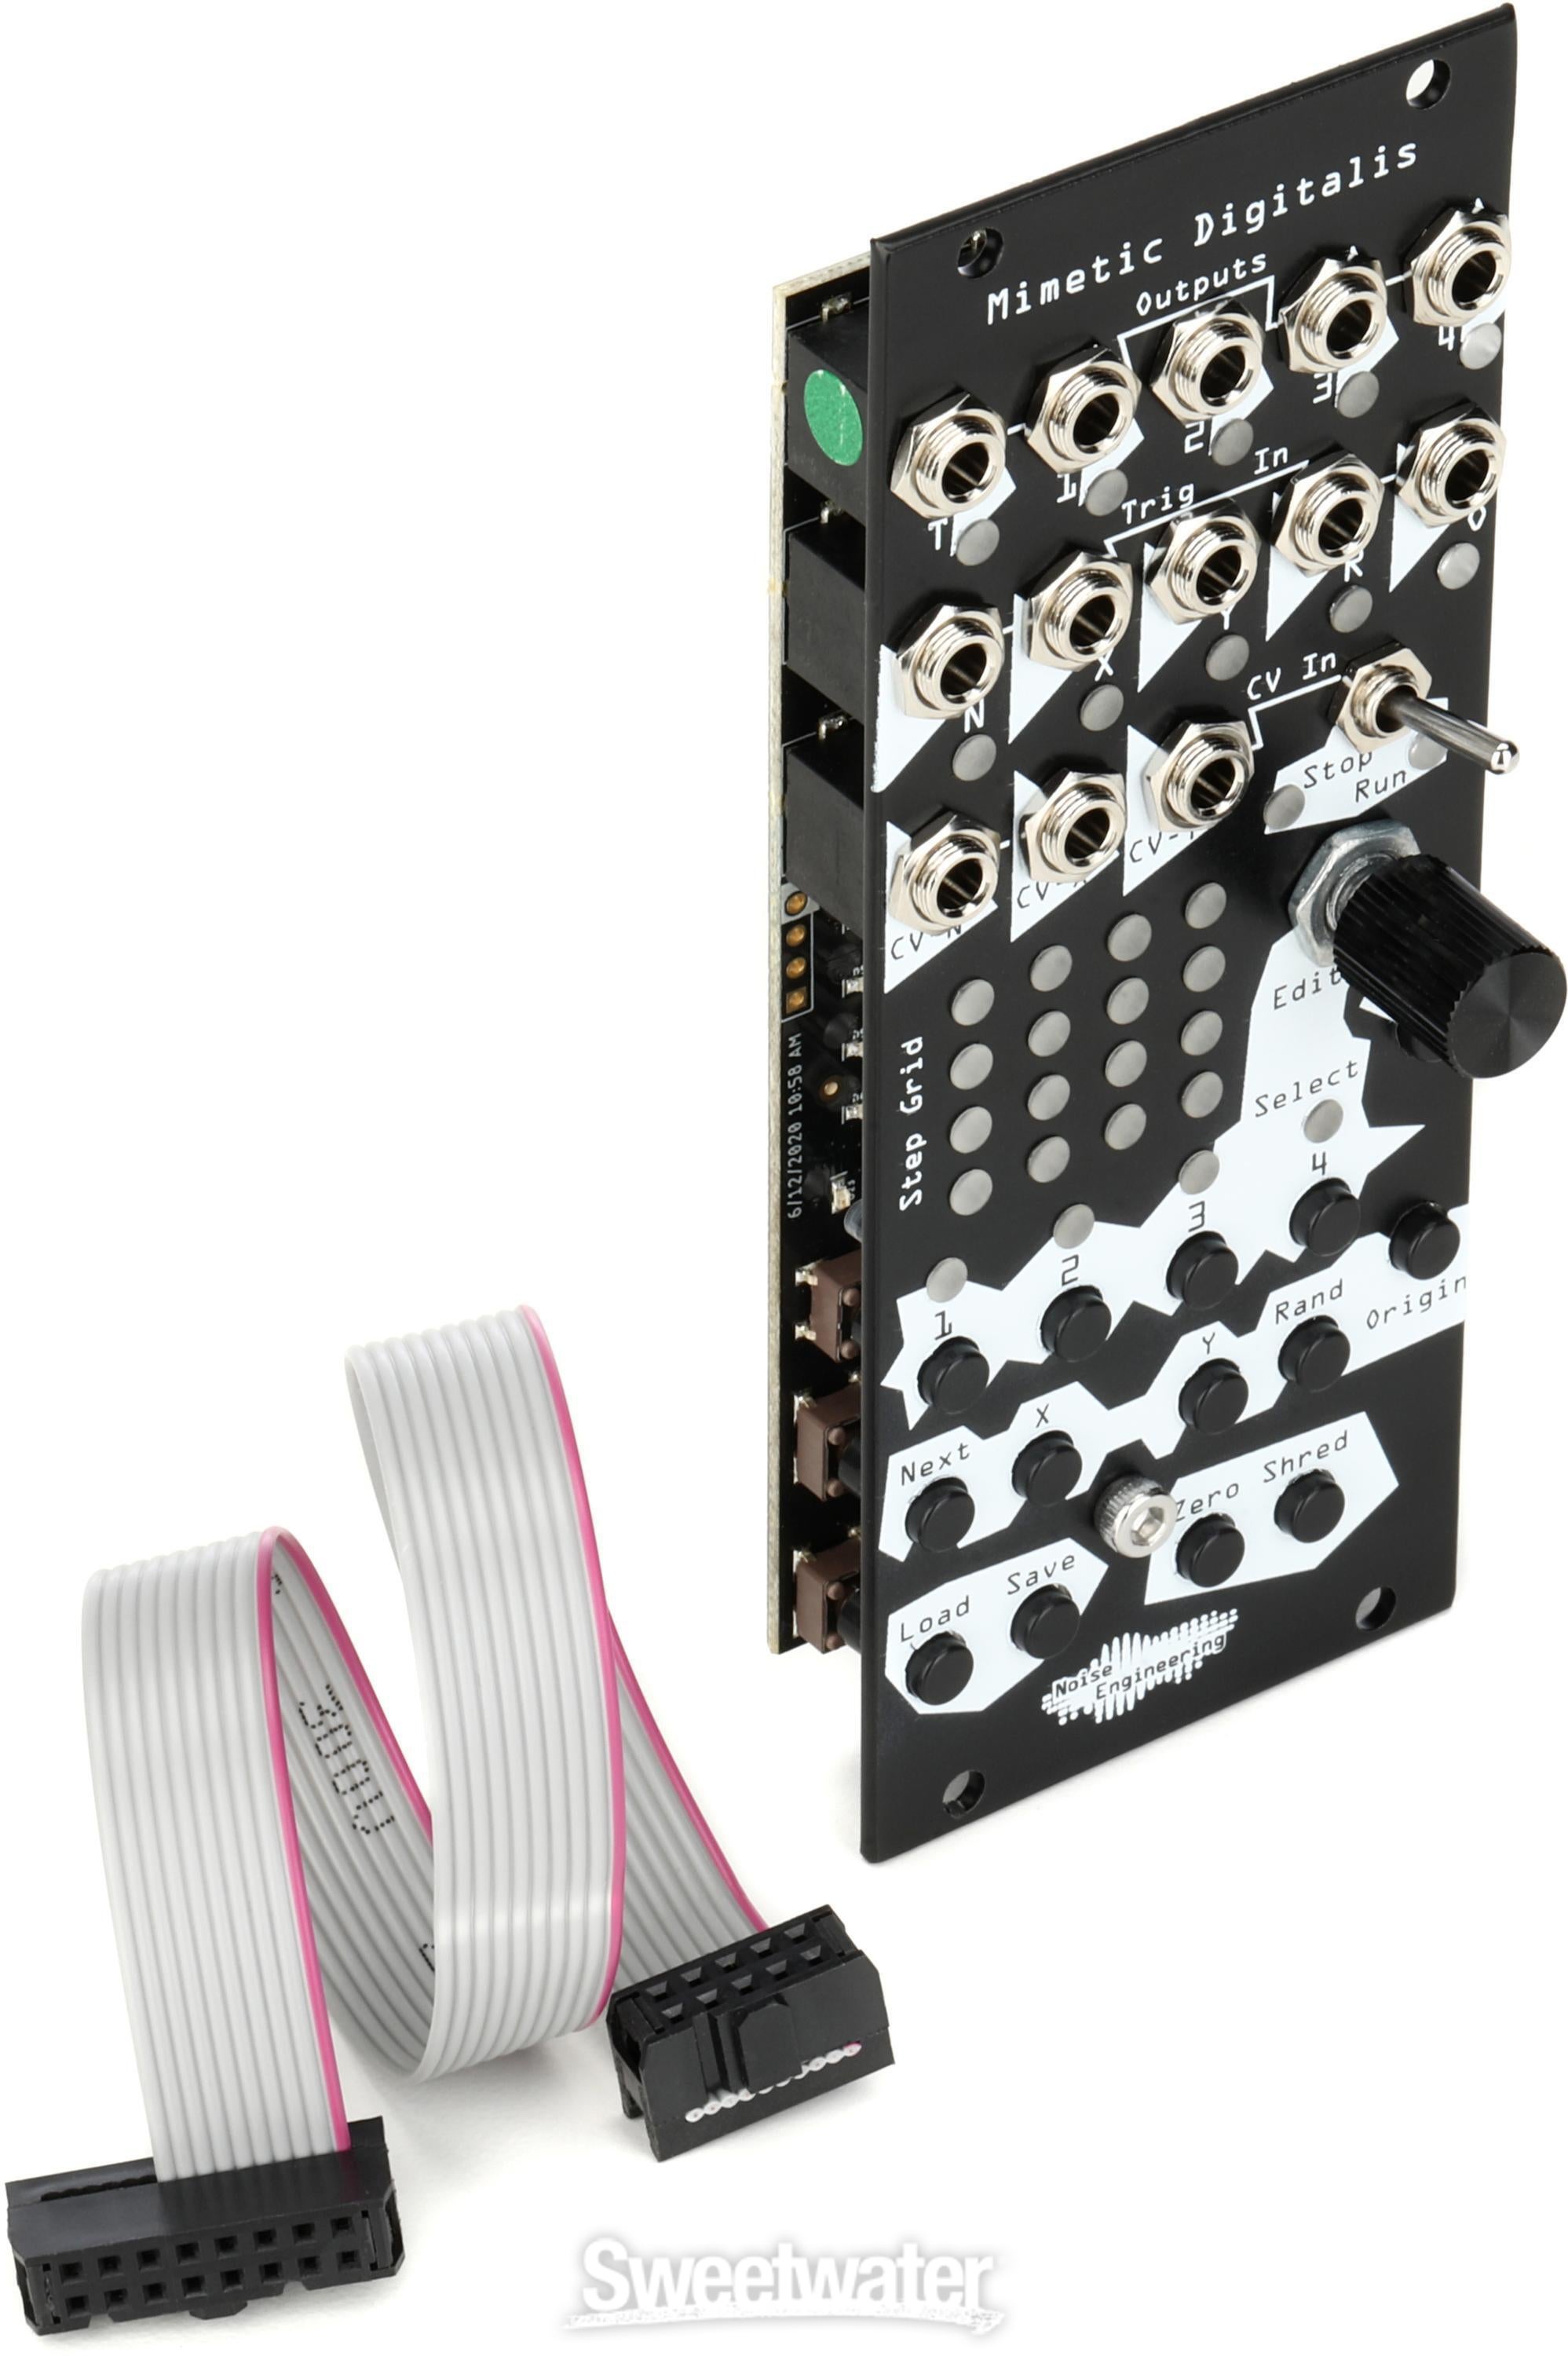 Noise Engineering Mimetic Digitalis 4-channel 16-step CV Step Sequencer  Eurorack Module - Black